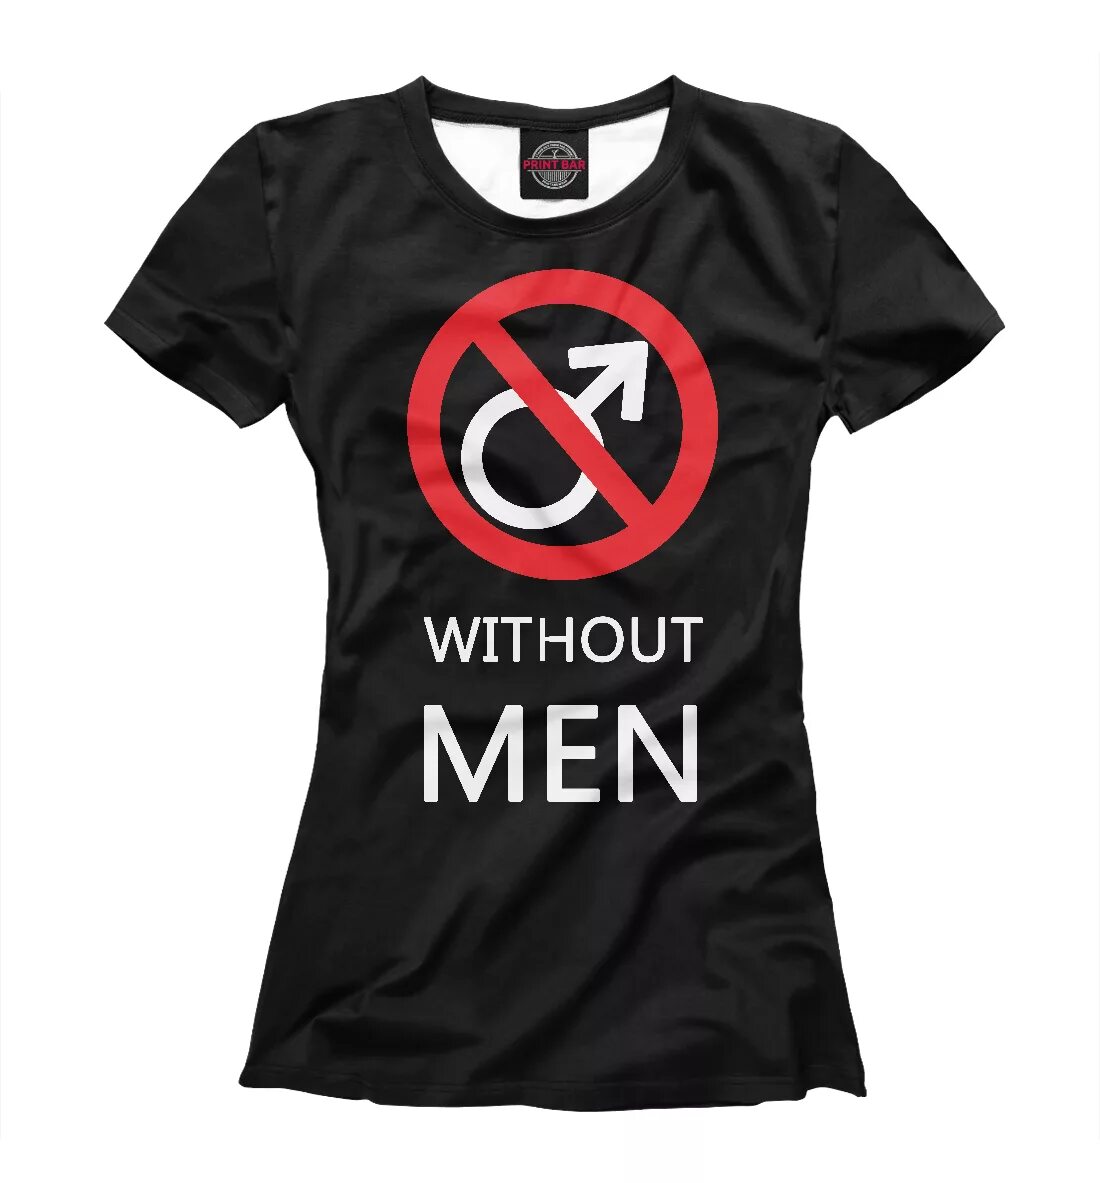 Мужчины без т. Футболка без мужиков. Парень без футболки. Женская футболка без мужиков. Мужик без майки.